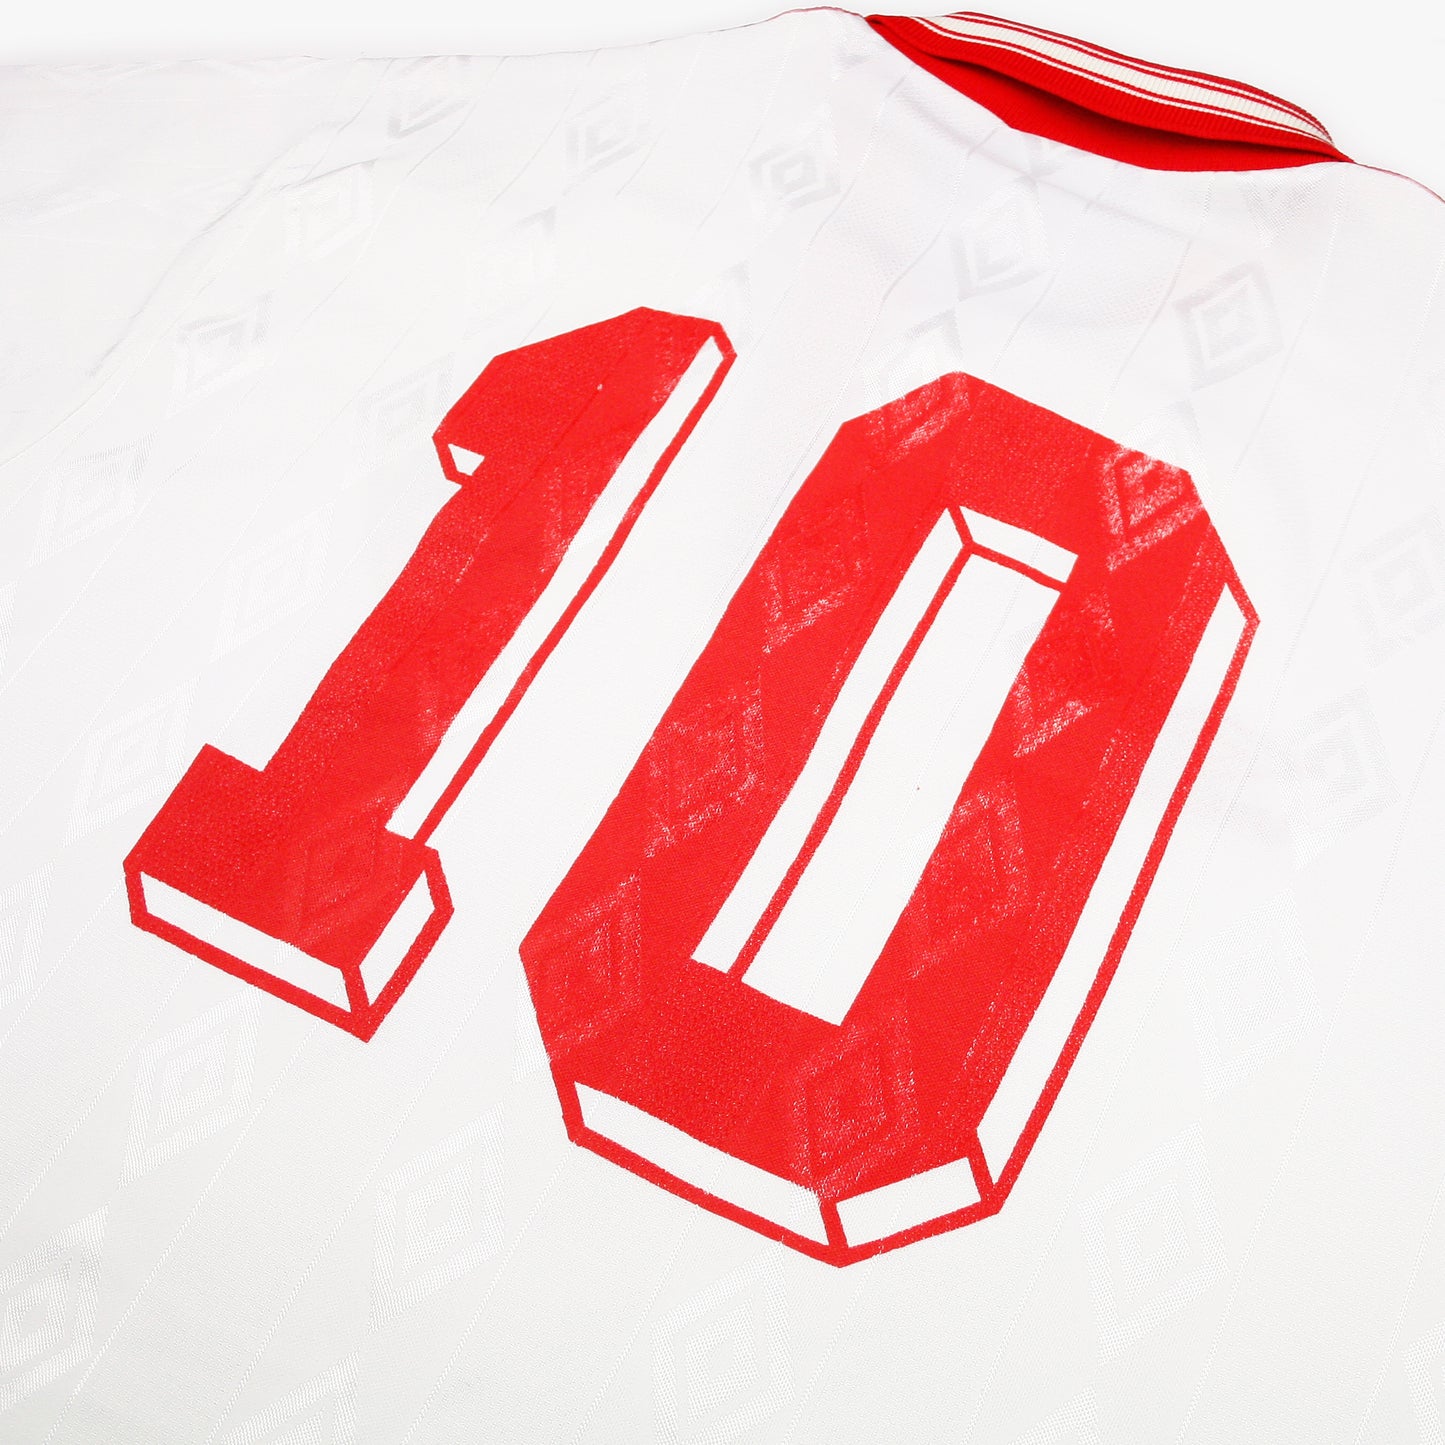 Sevilla 98/99 • Home Shirt • XL • #10